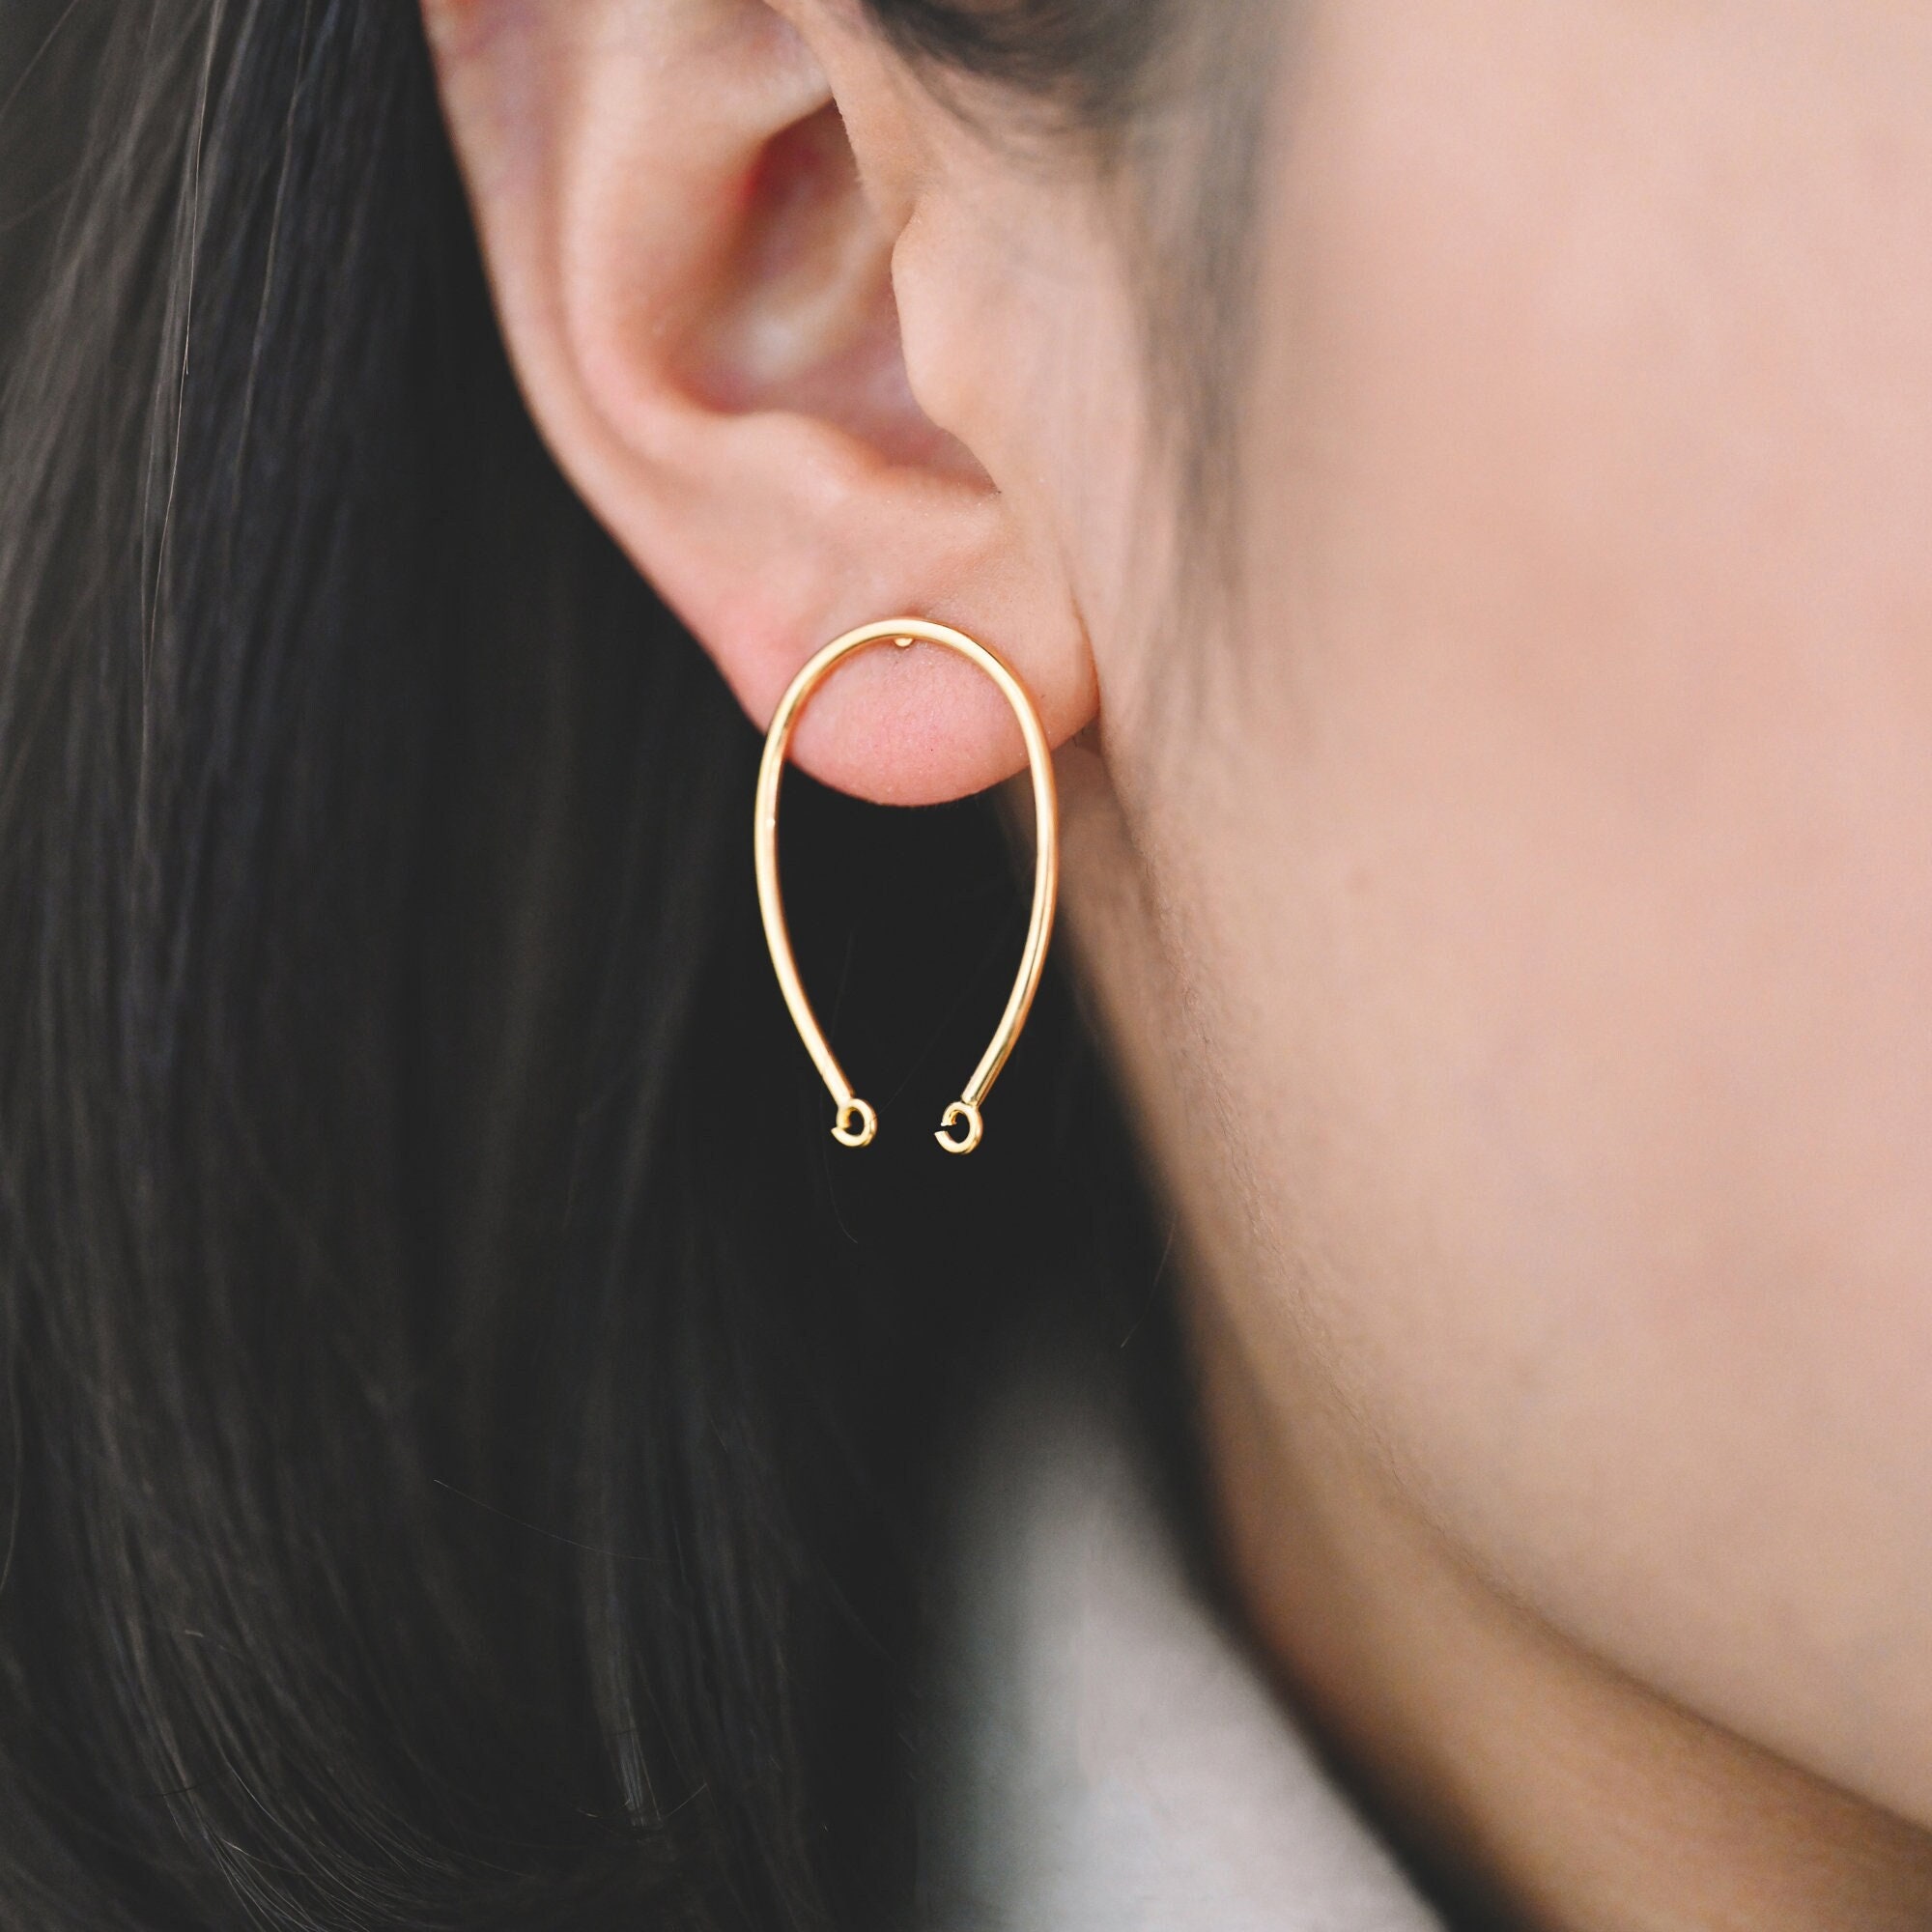 6pcs Hypoallergenic Earrings Studs Jewelry Making Rose Flowe Stud Earrings  Connector Pin Post With Loop Ear